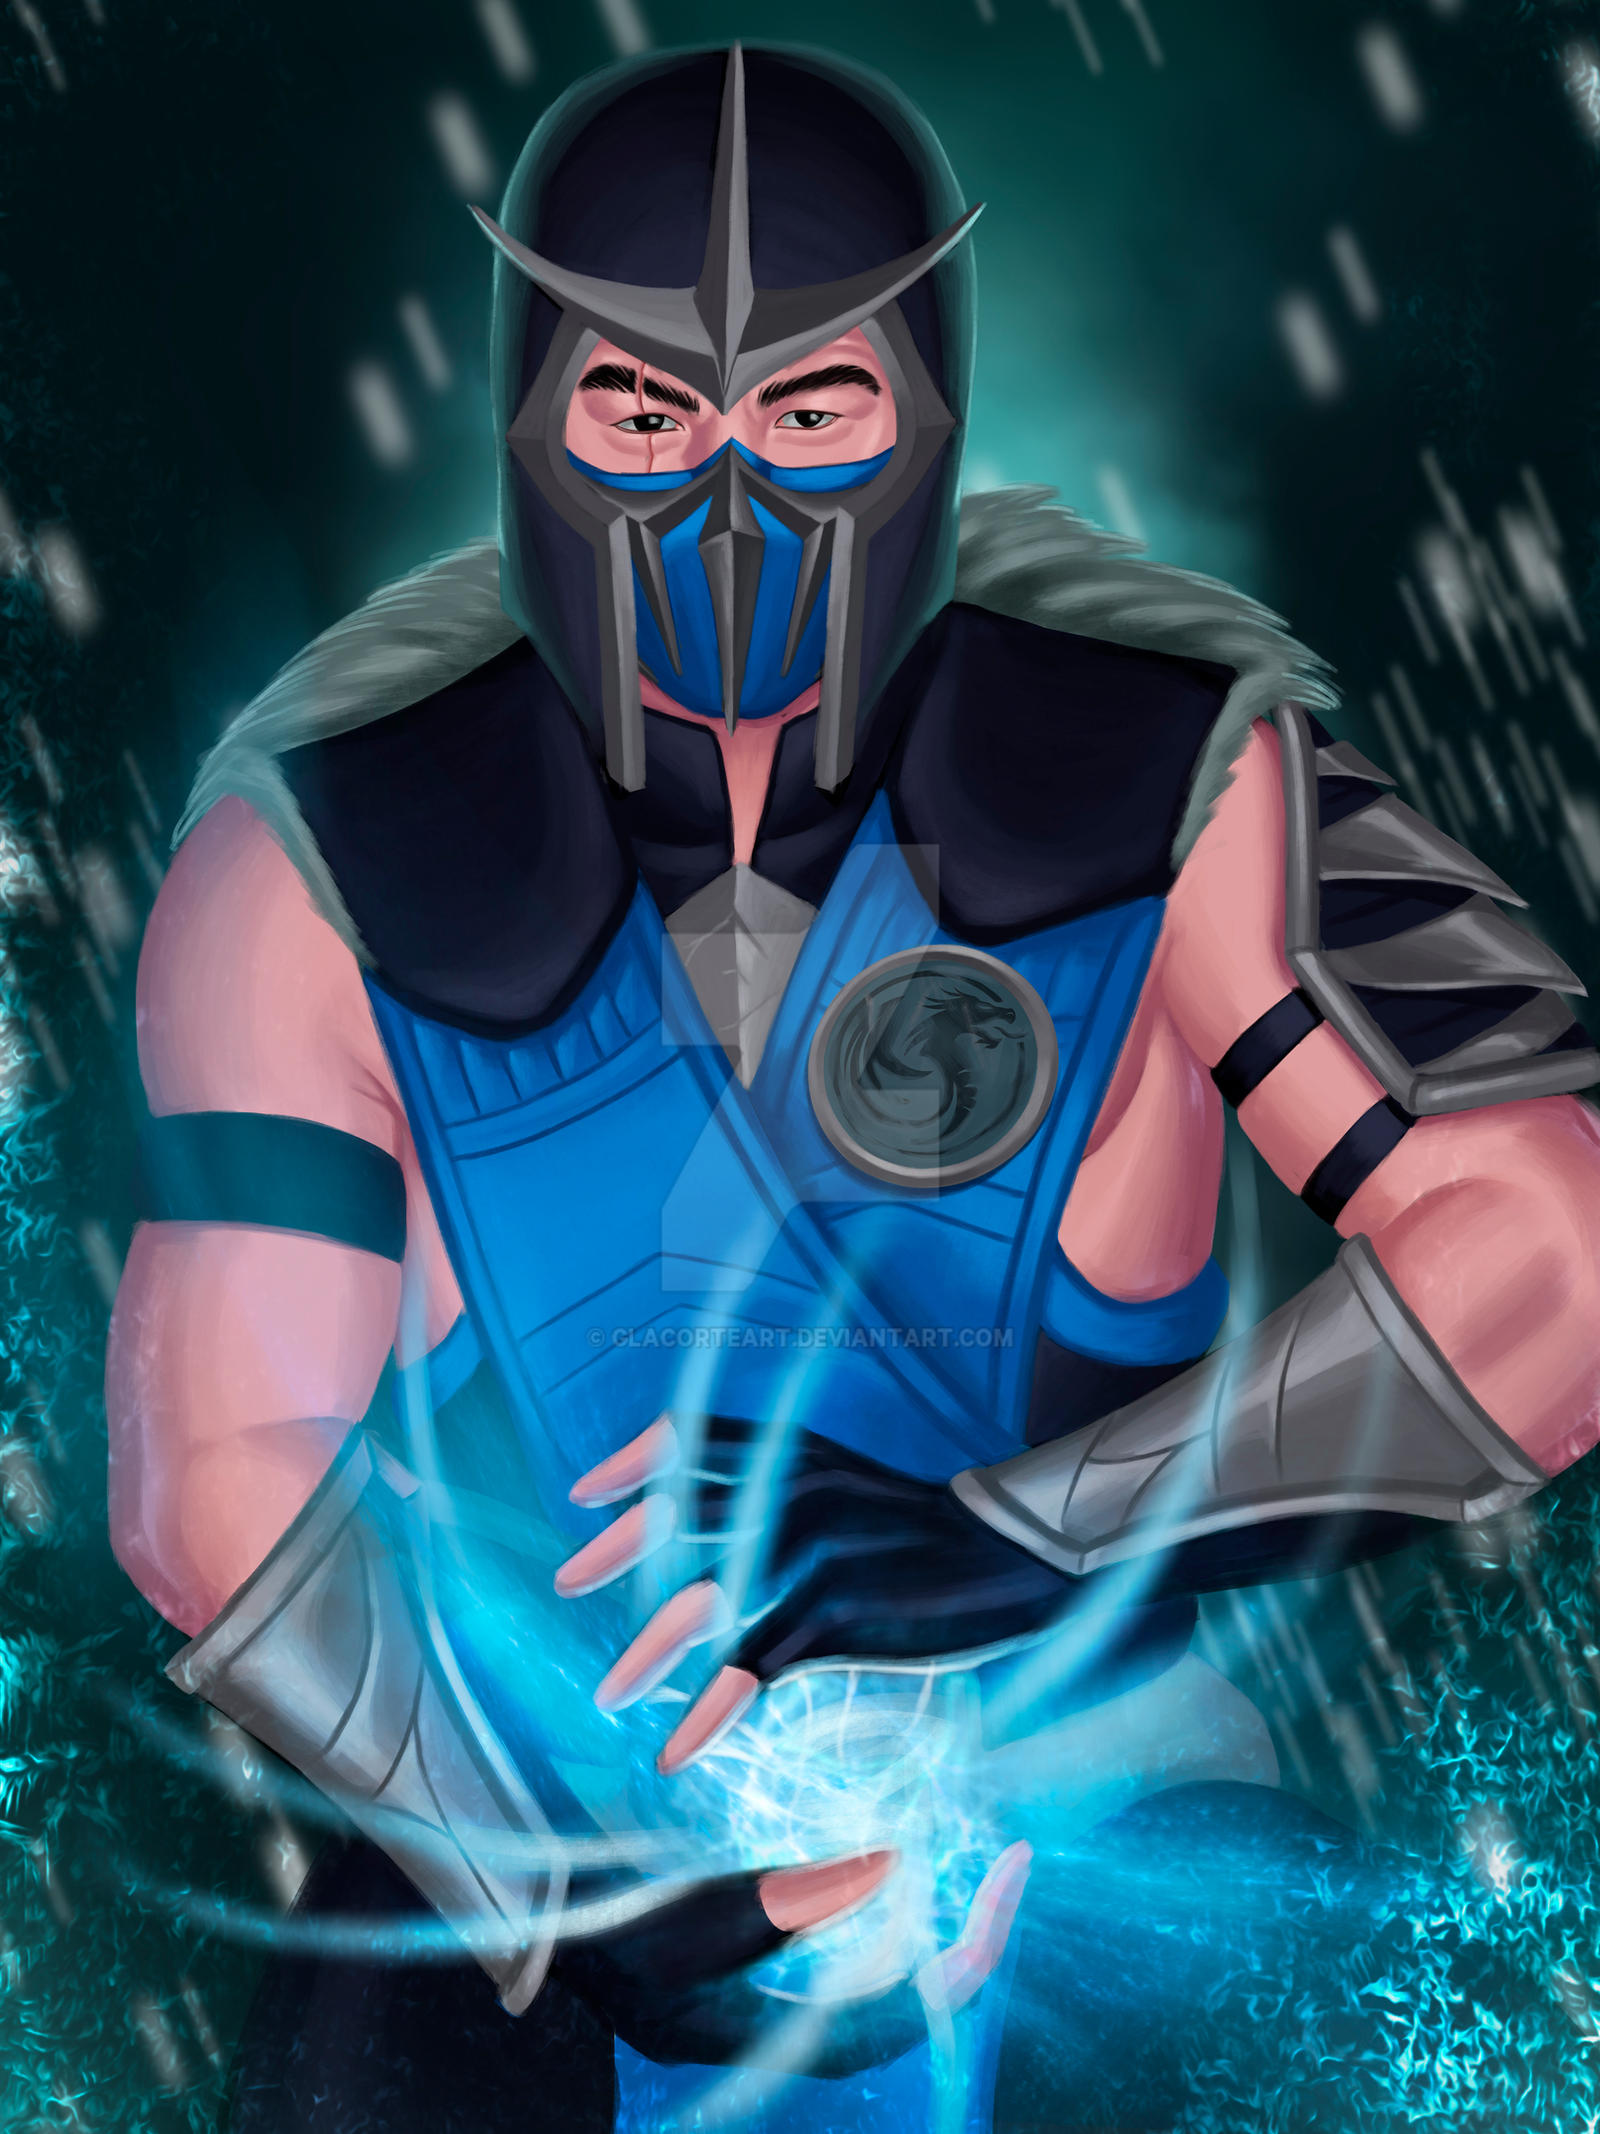 Mortal Kombat - Grandmaster SubZero by Glacorteart on DeviantArt